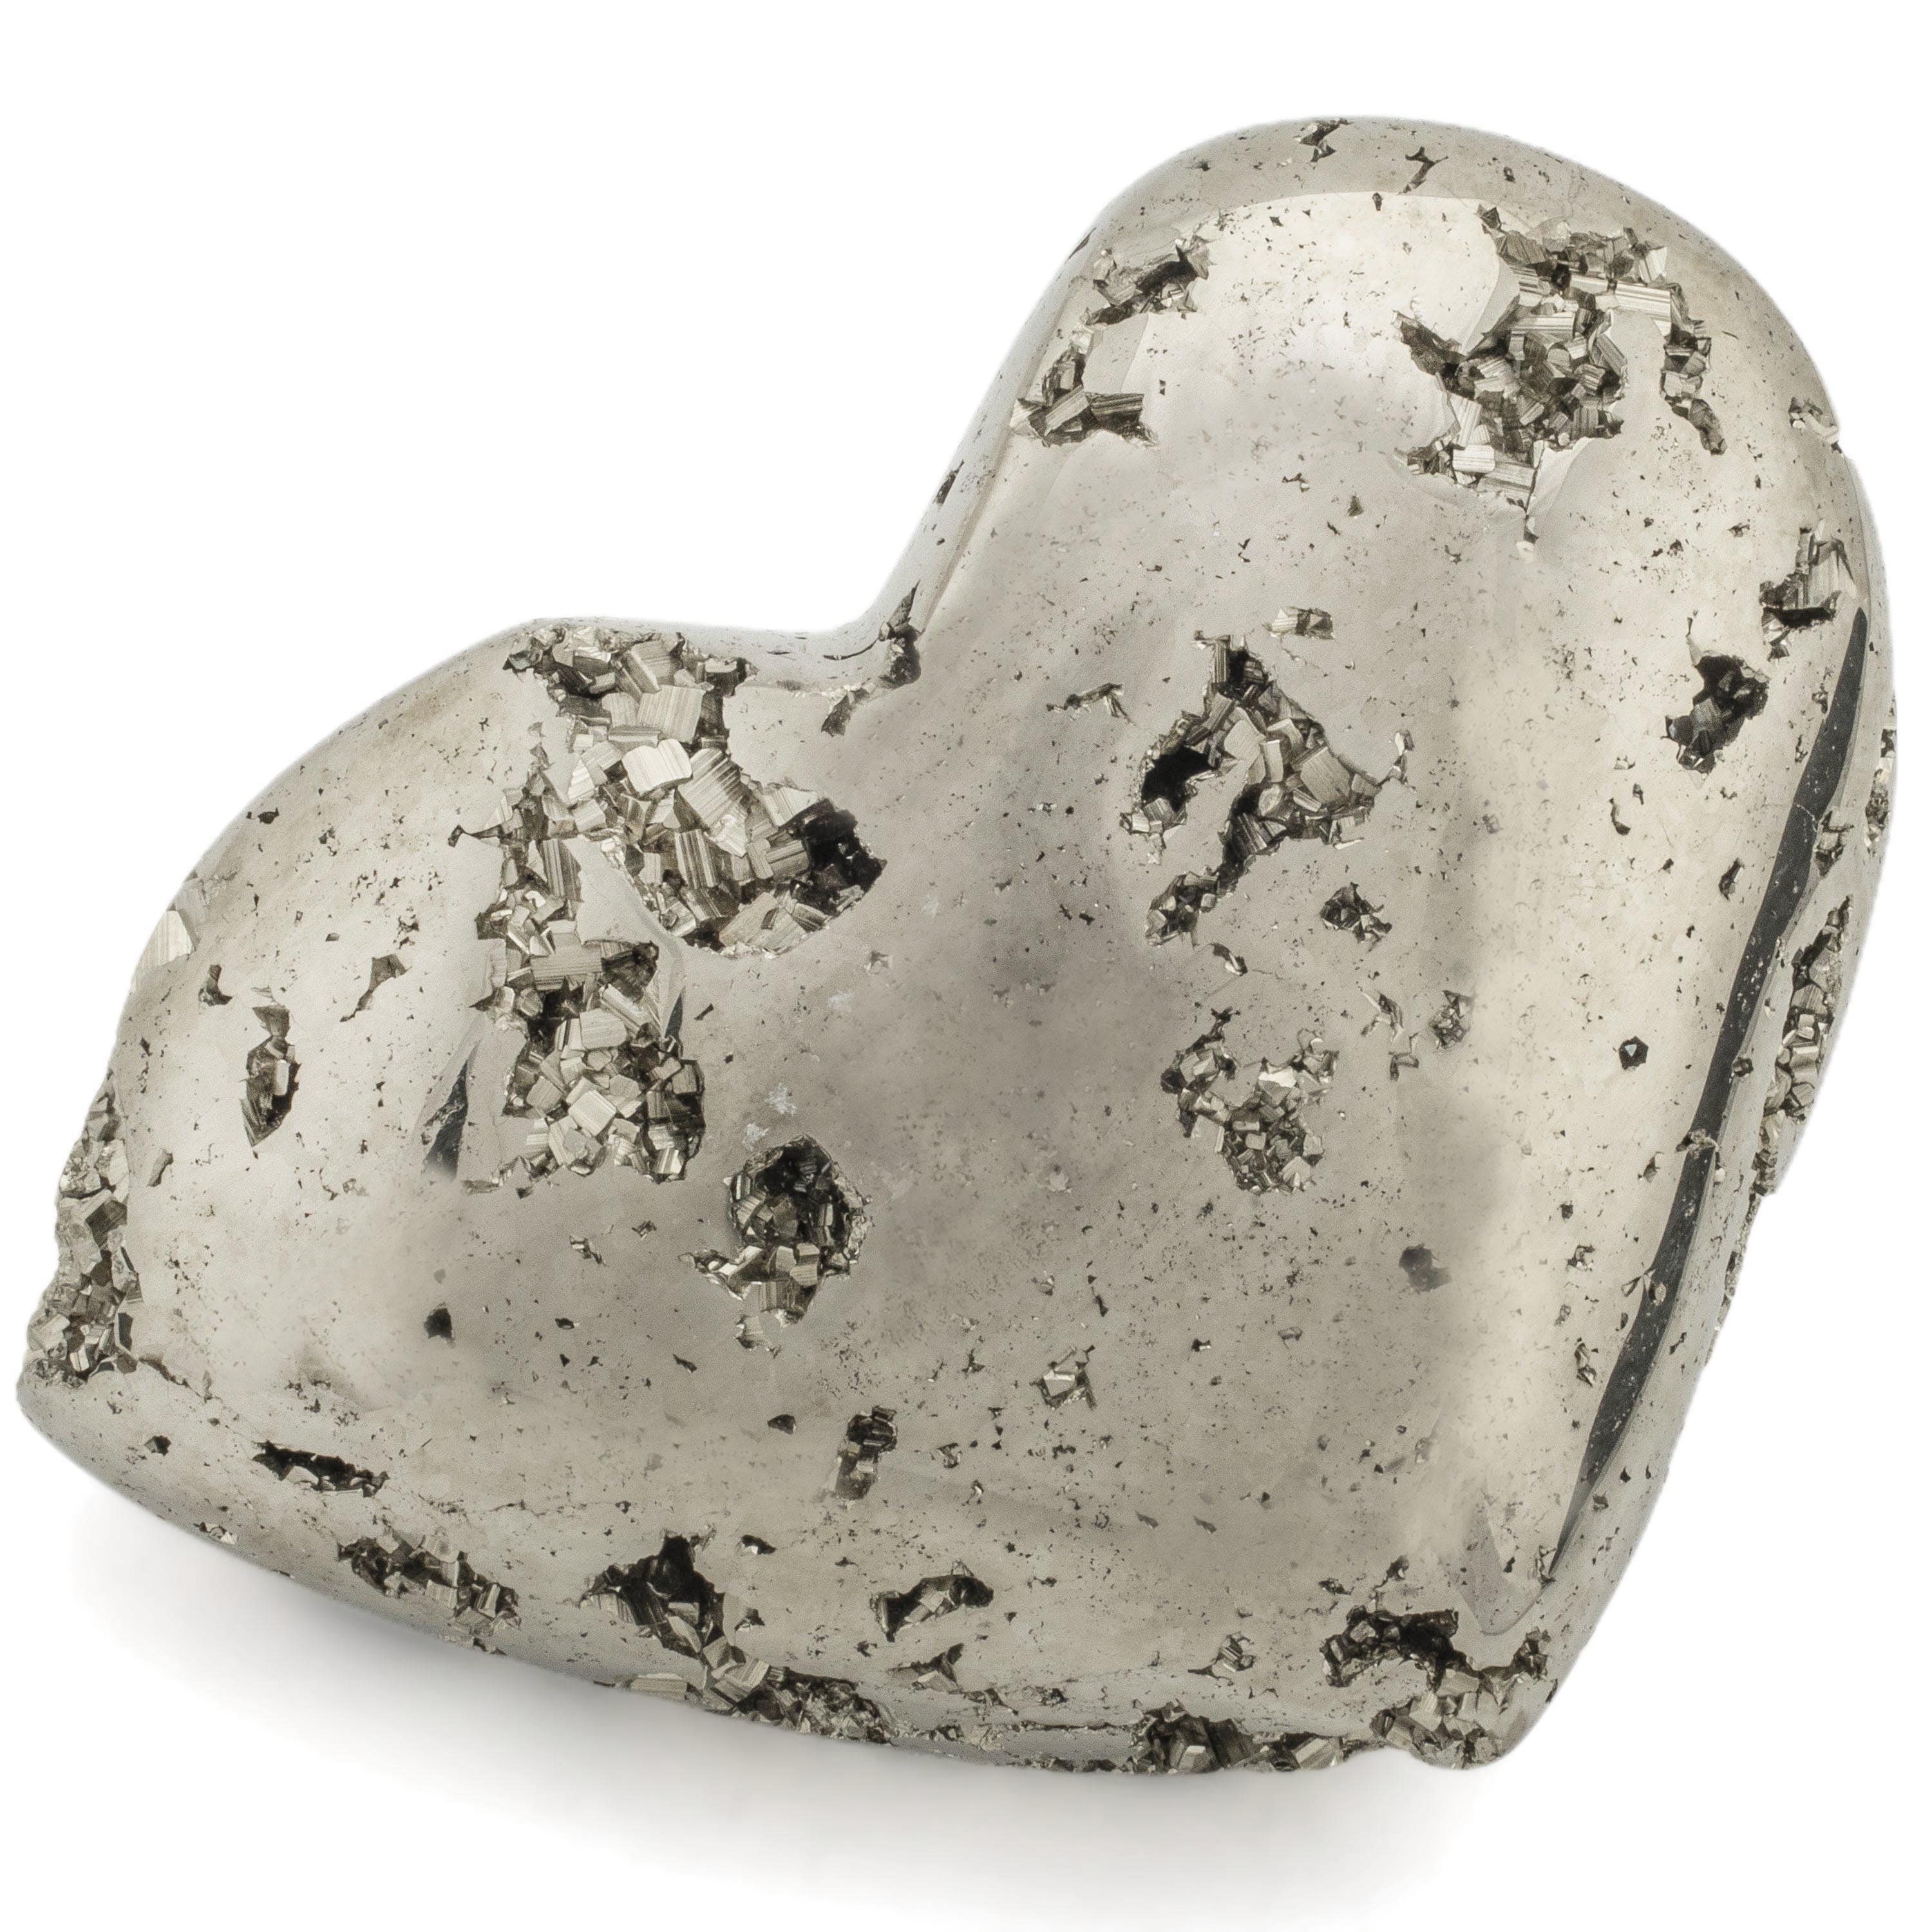 Kalifano Pyrite Pyrite Heart Carving 5" / 995 grams GH1000-PC.002